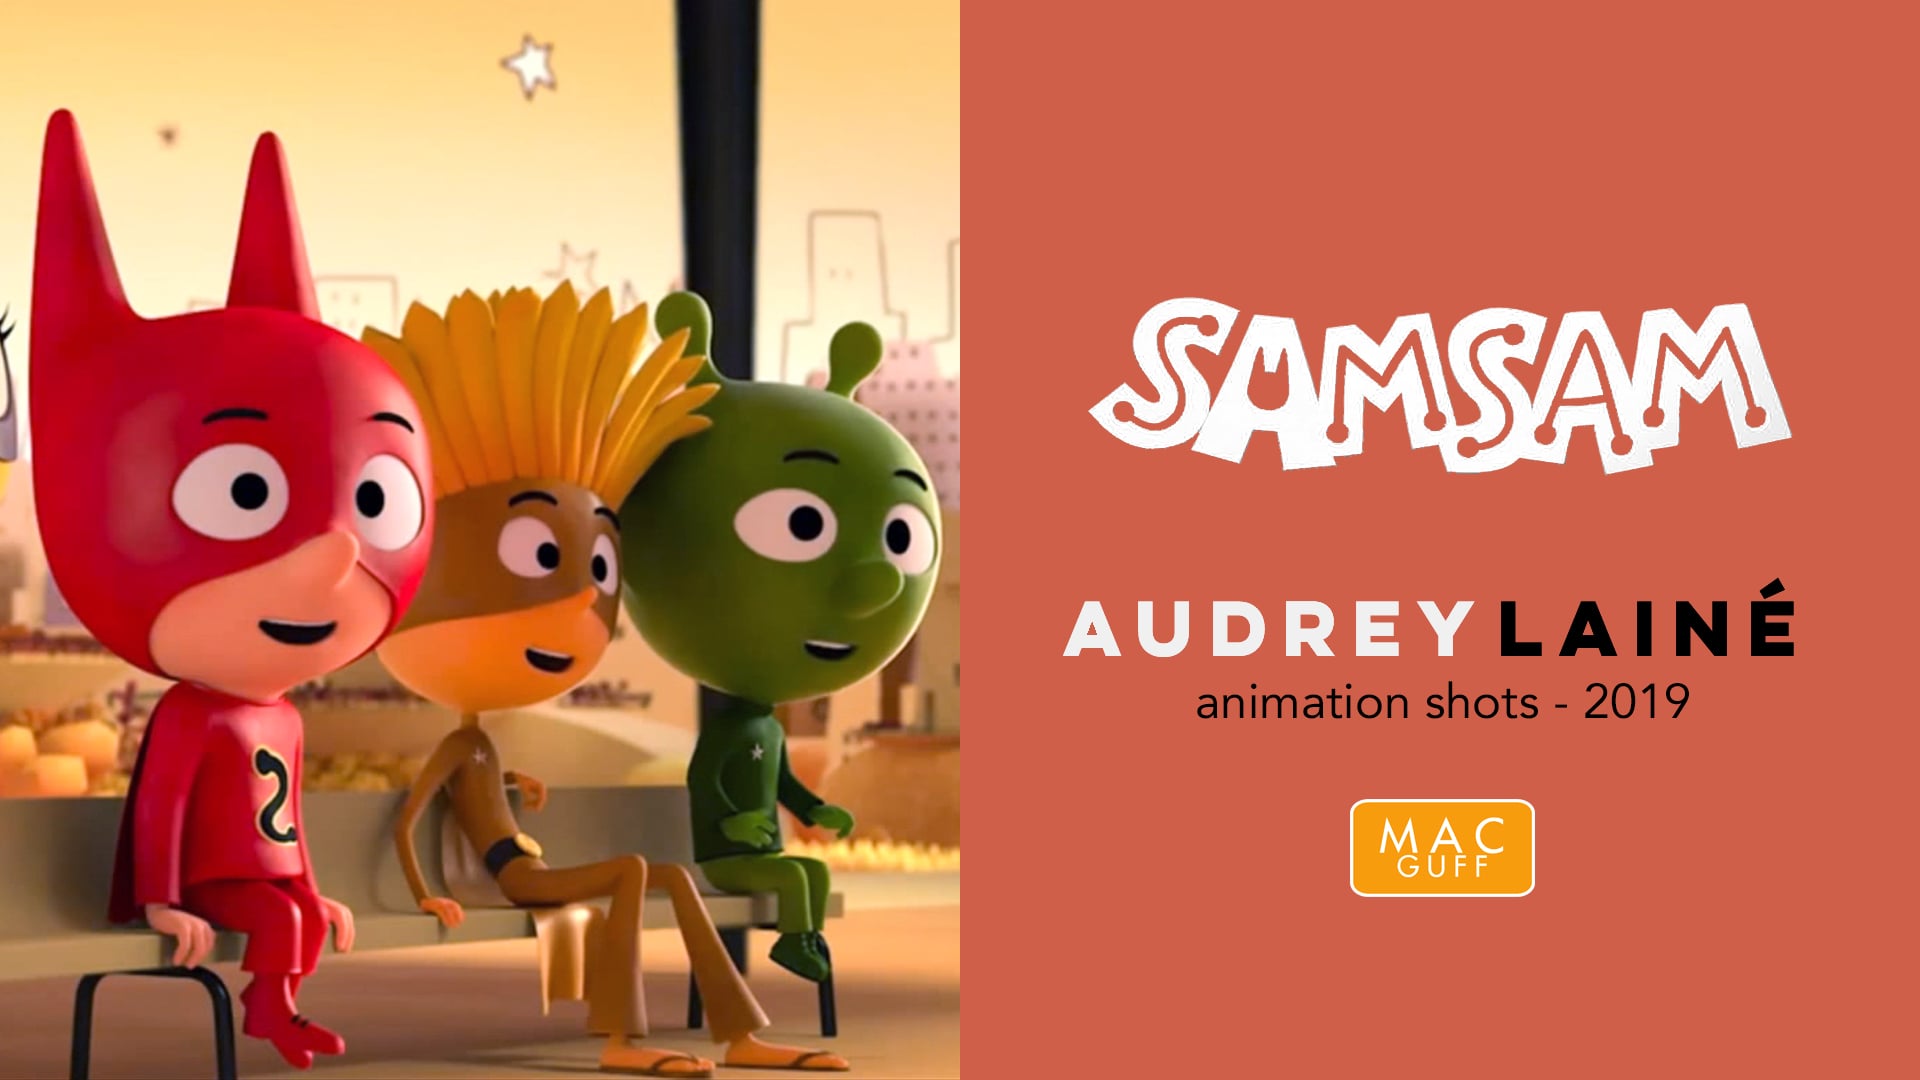 Audrey Lainé // Samsam animation shots 2019